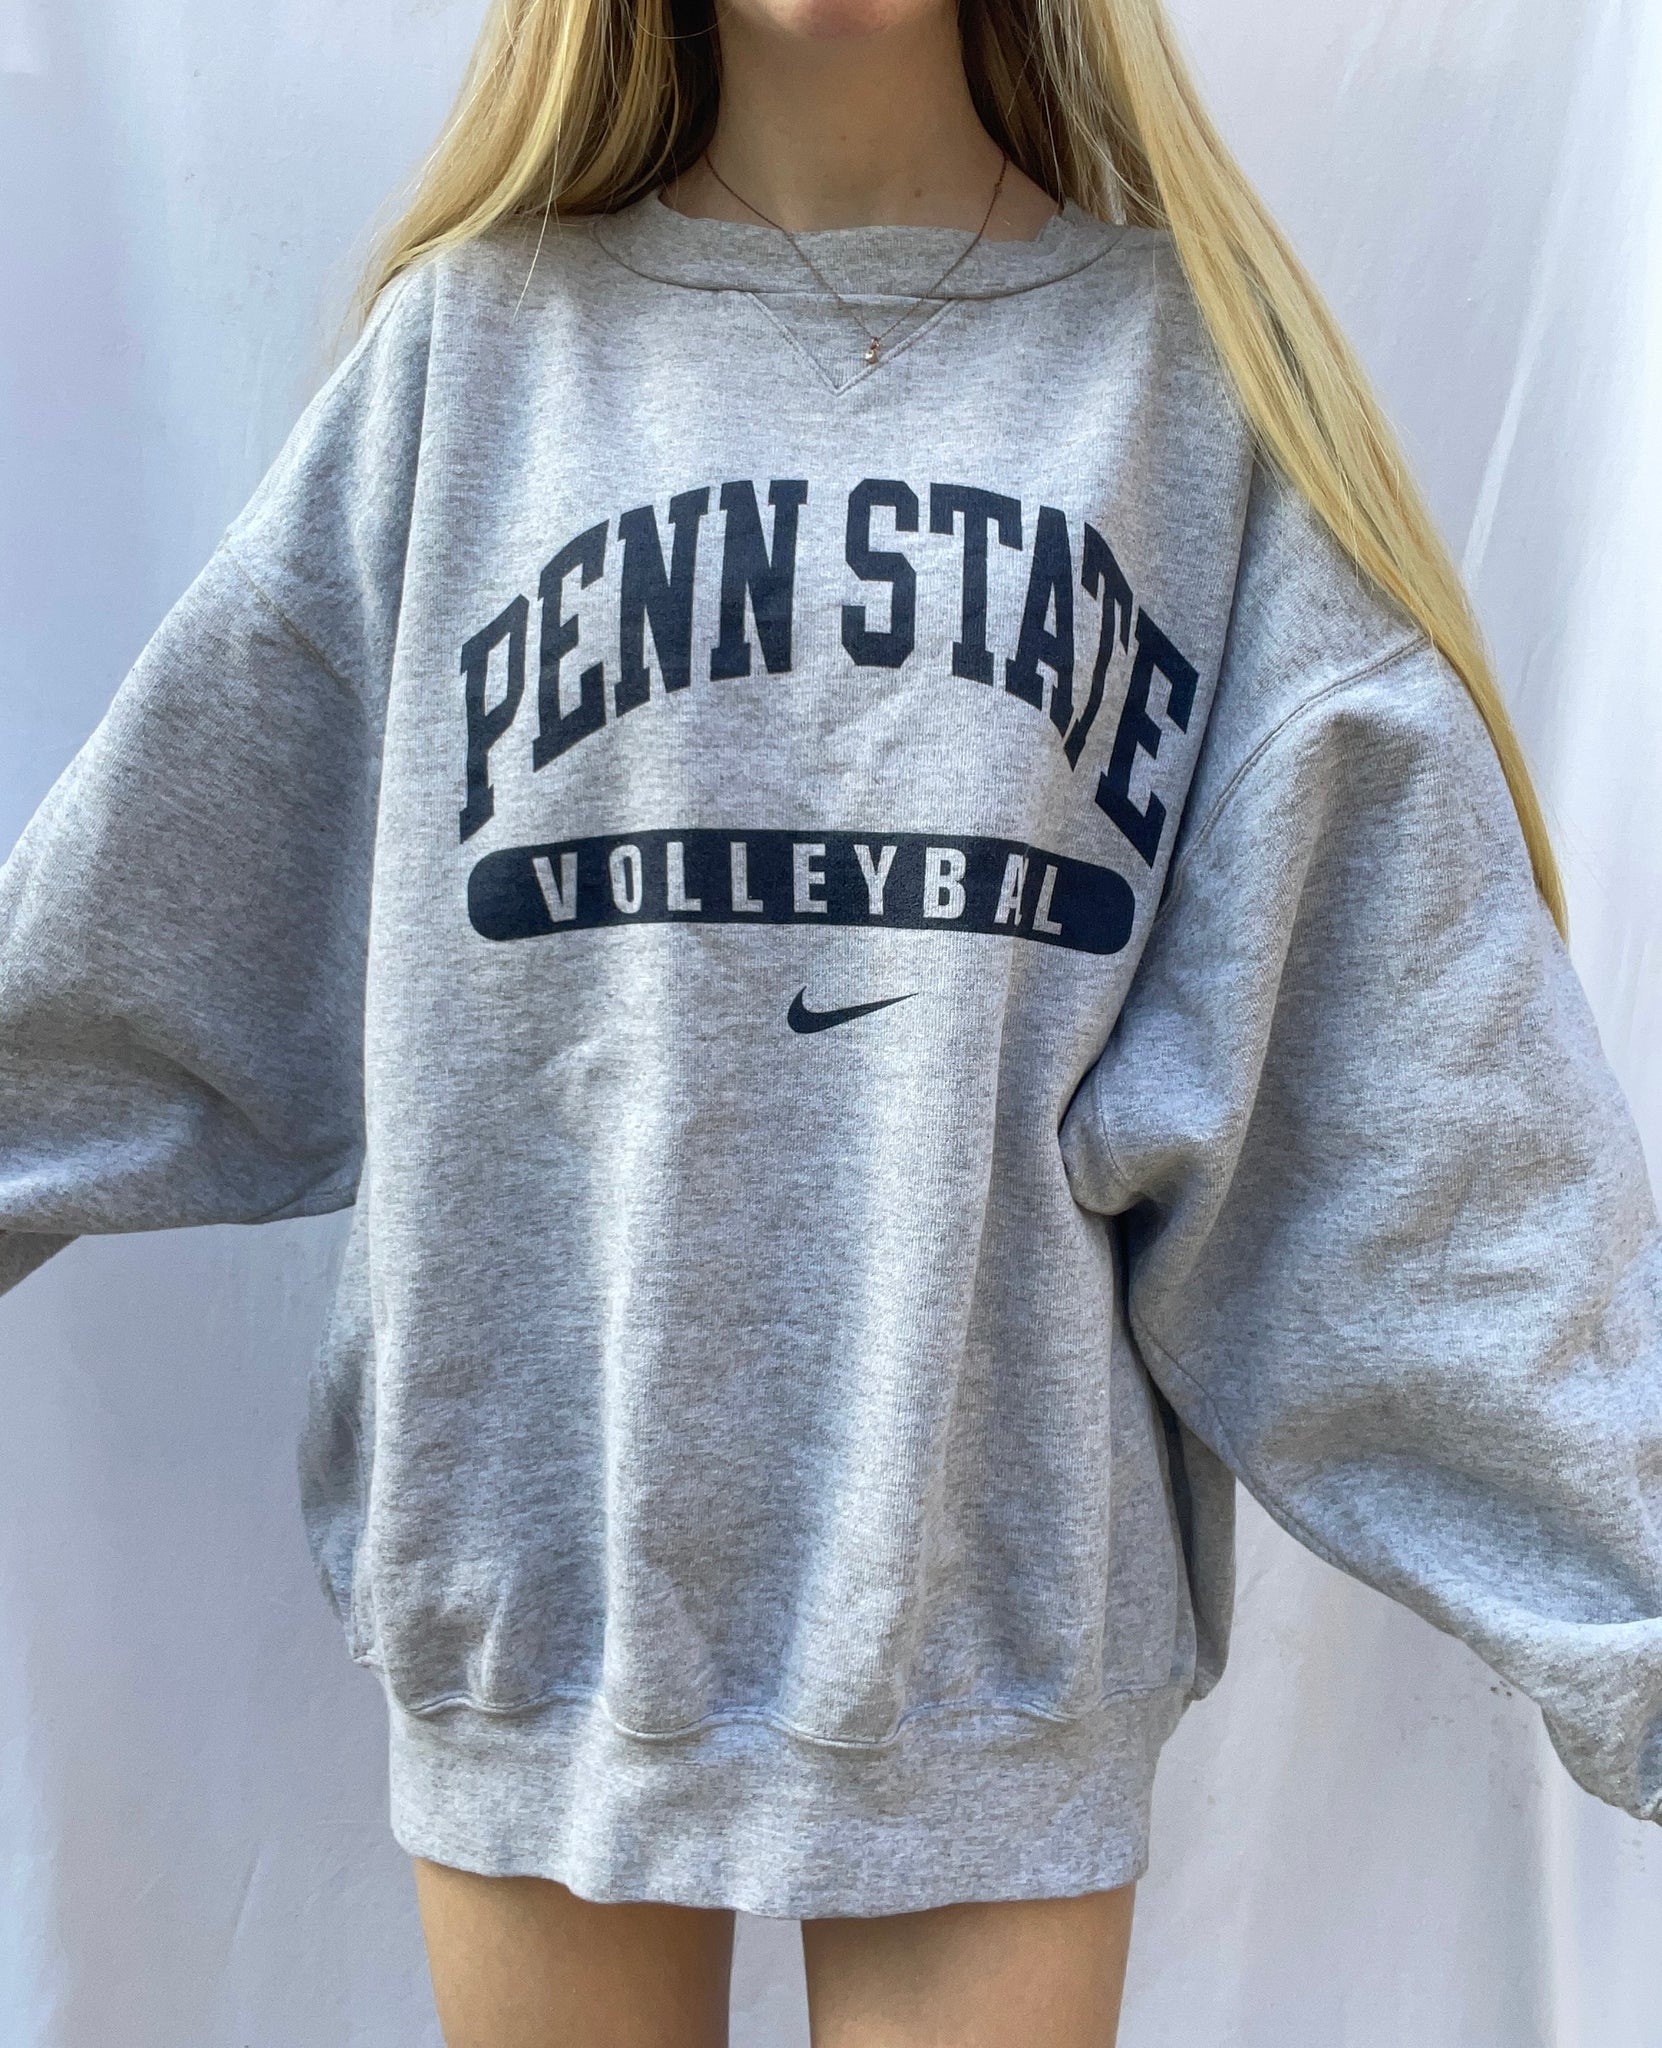 L) Penn State Volleyball Nike Sweatshirt Happyy.thrifts